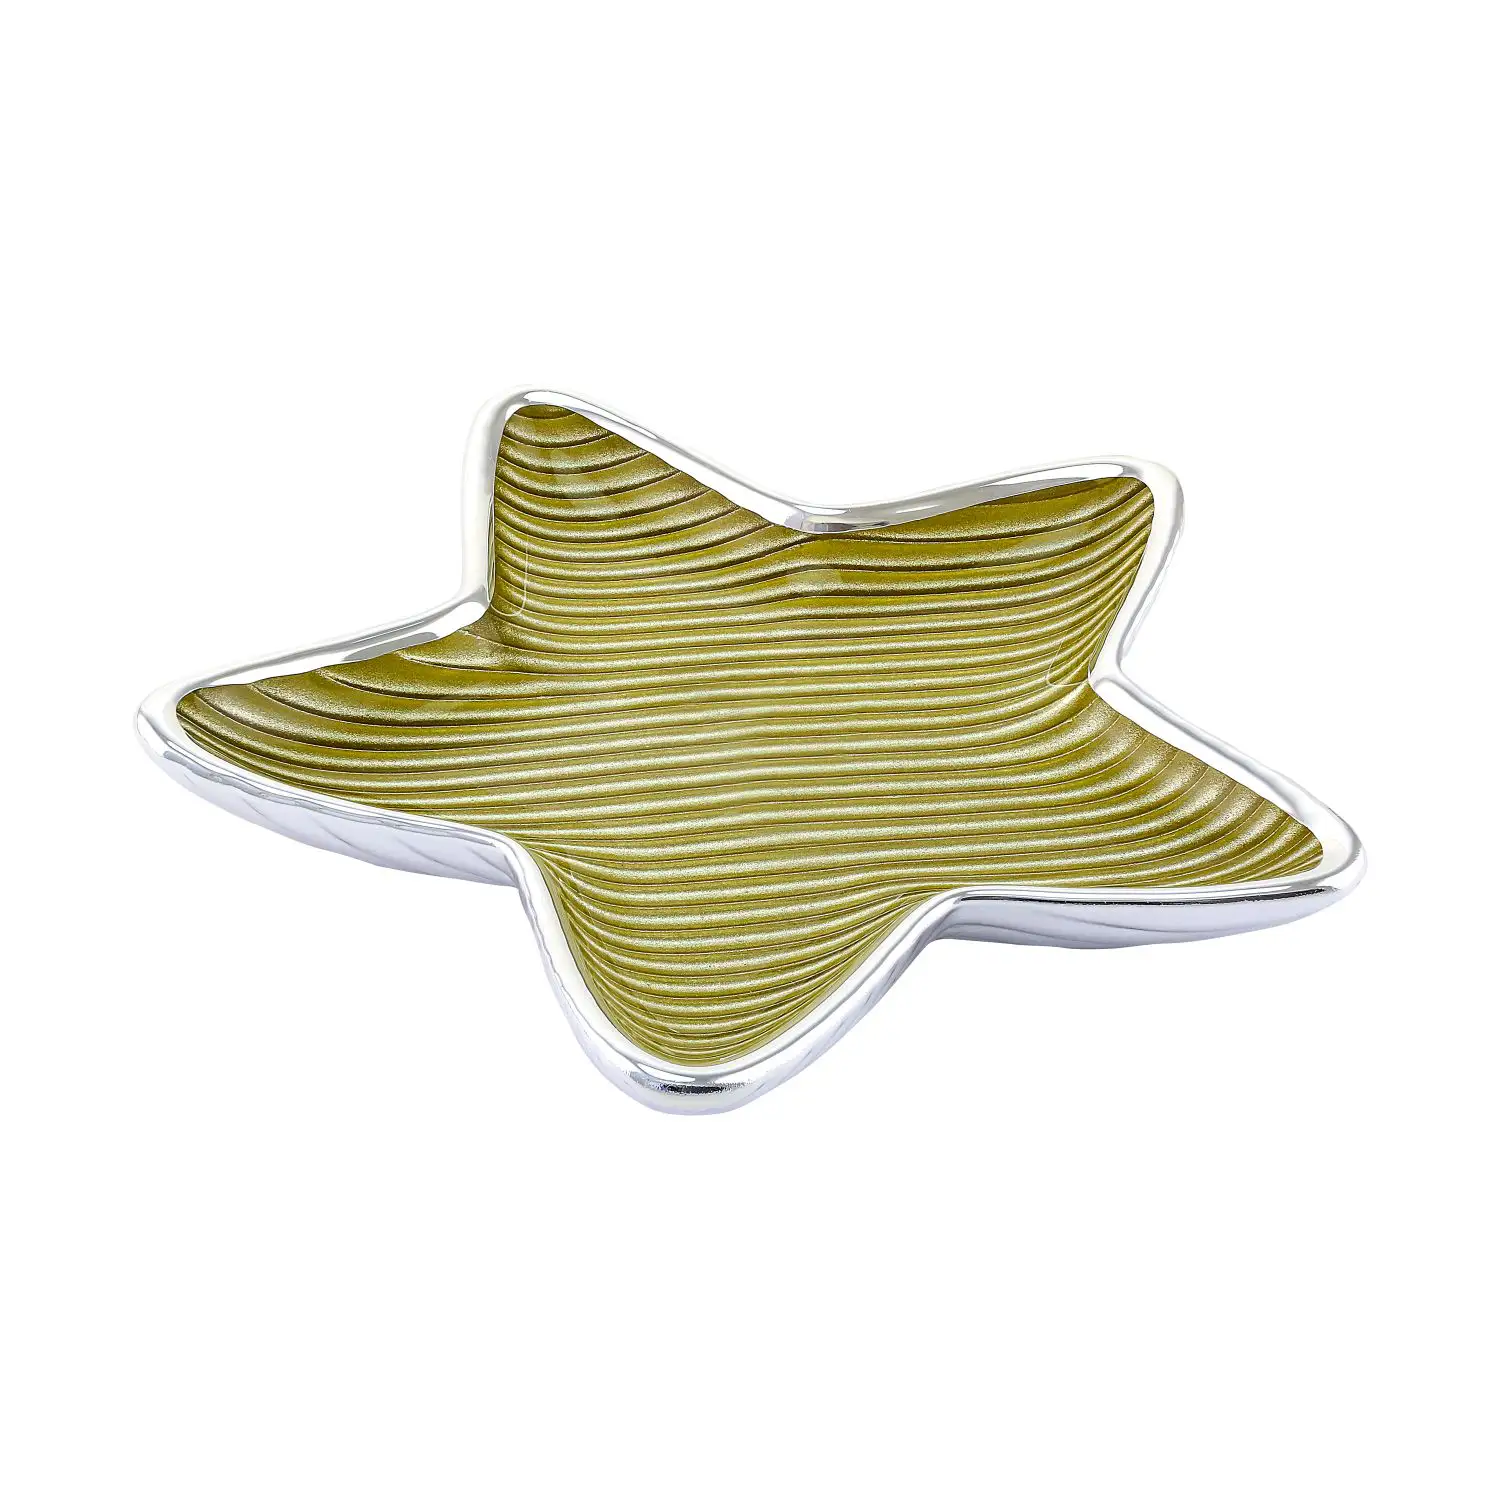 Тарелка стеклянная STELLA RIGHE (цвет золотой) диаметр 17 см тарелка стеклянная stella righe цвет песочный диаметр 17 см